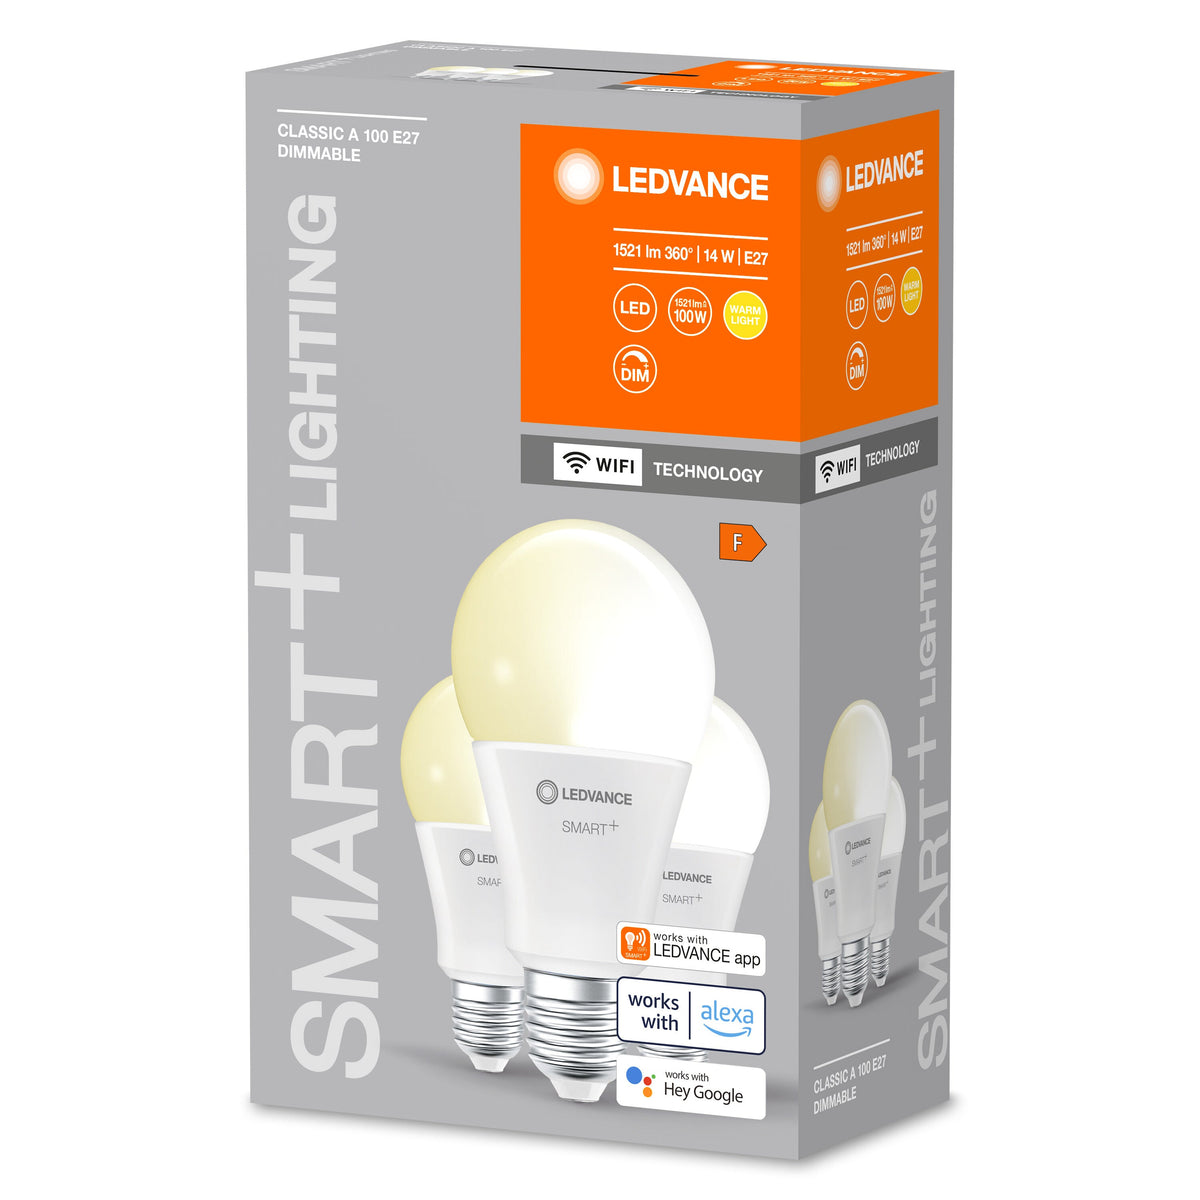 Lampada LED LEDVANCE WIFI SMART+, bianca, 14W, 1521lm, E27 confezione da 3